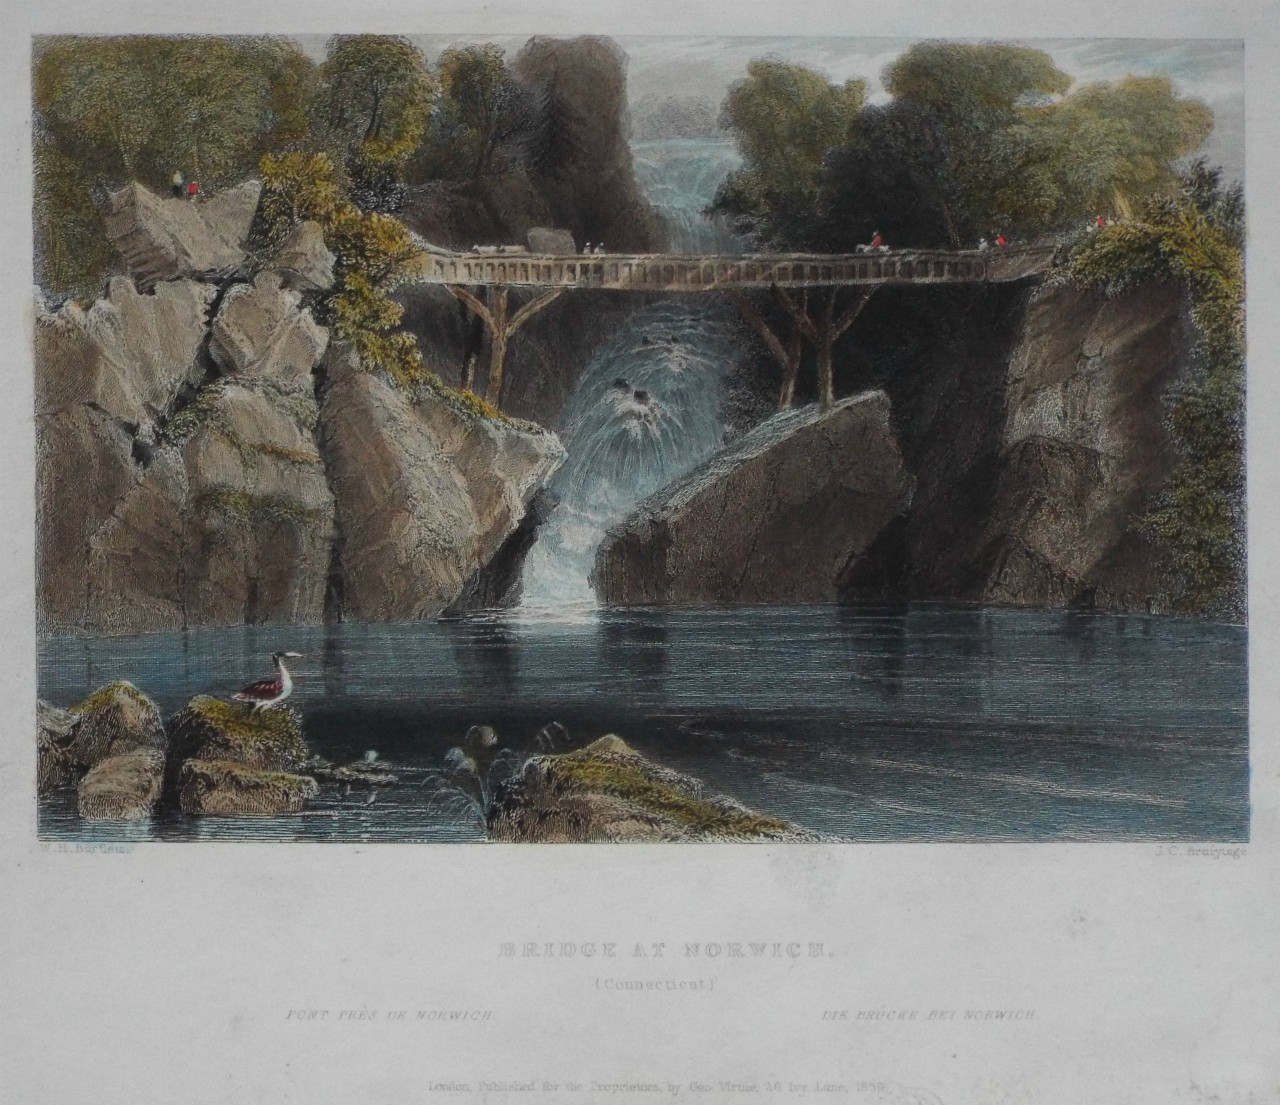 Print - Bridge at Norwich. (Connecticut) - Armytage